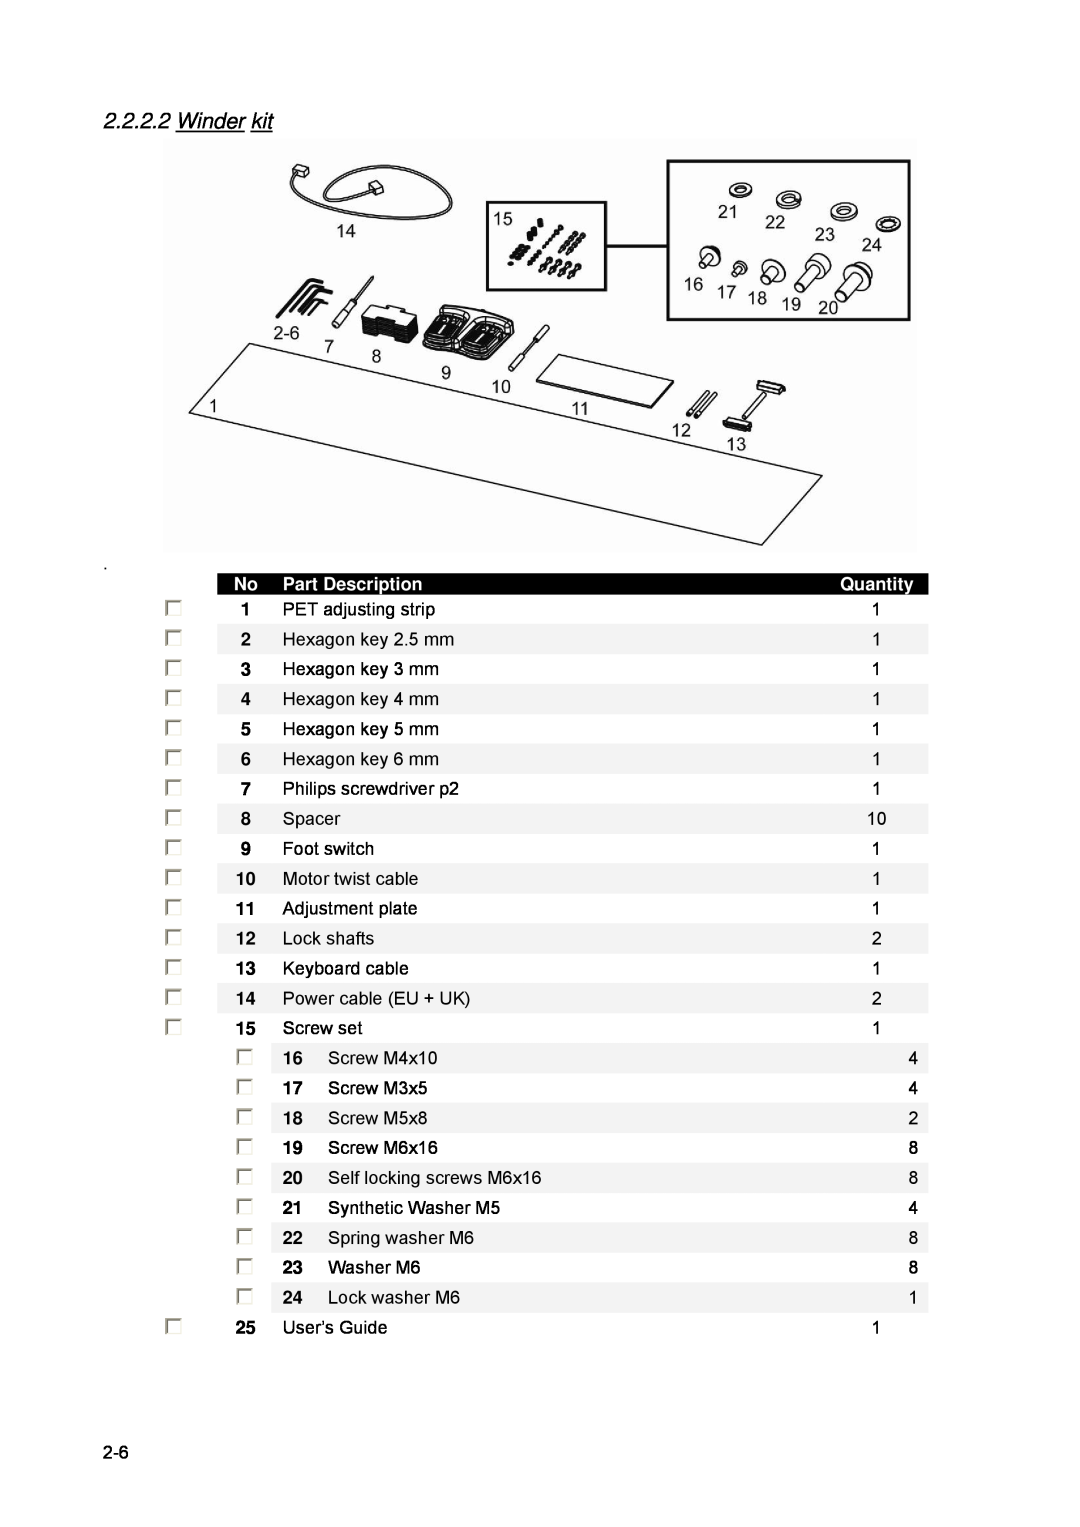 Xerox 82xx, 83xx manual Winder kit, Part Description, Quantity 